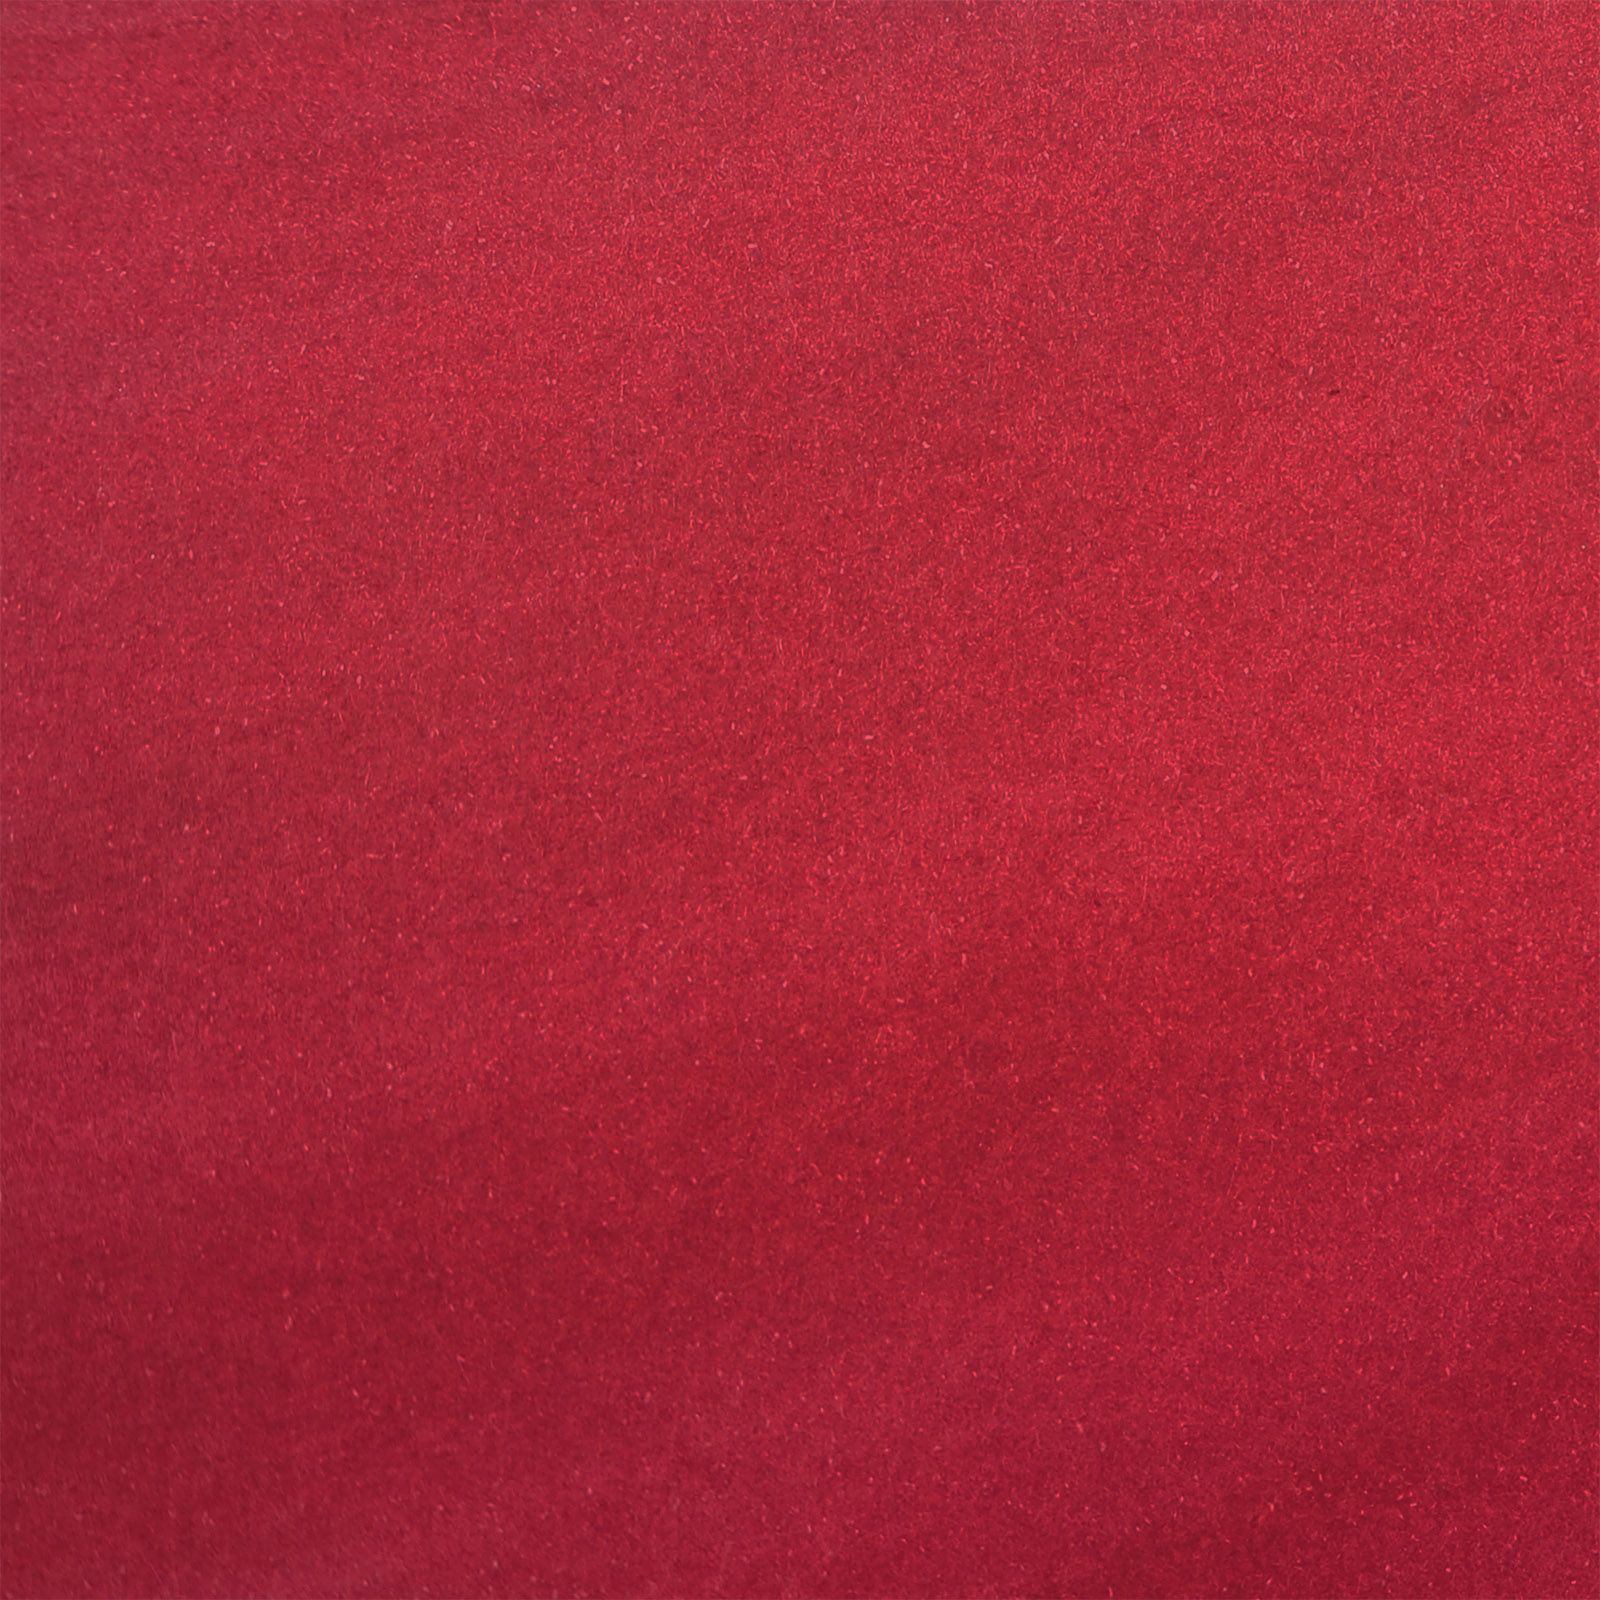 Cosmic Shimmer • Intense pigment stain Rich Crimson